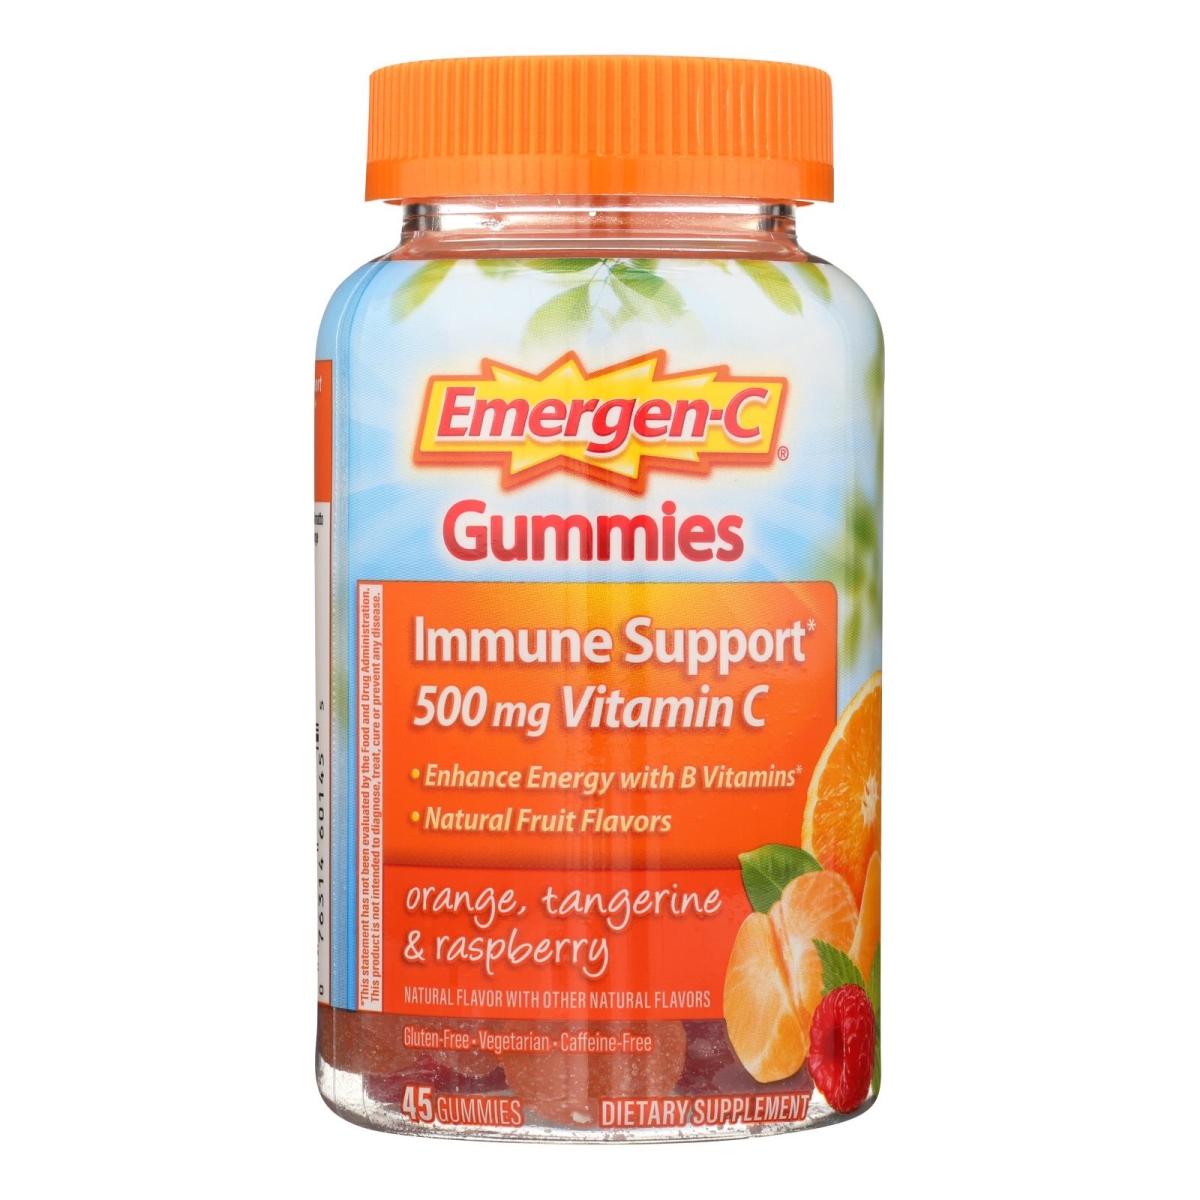 Picture of Emergen-c HG2060127 Gummies Immune Sup Core - 45 per Pocket